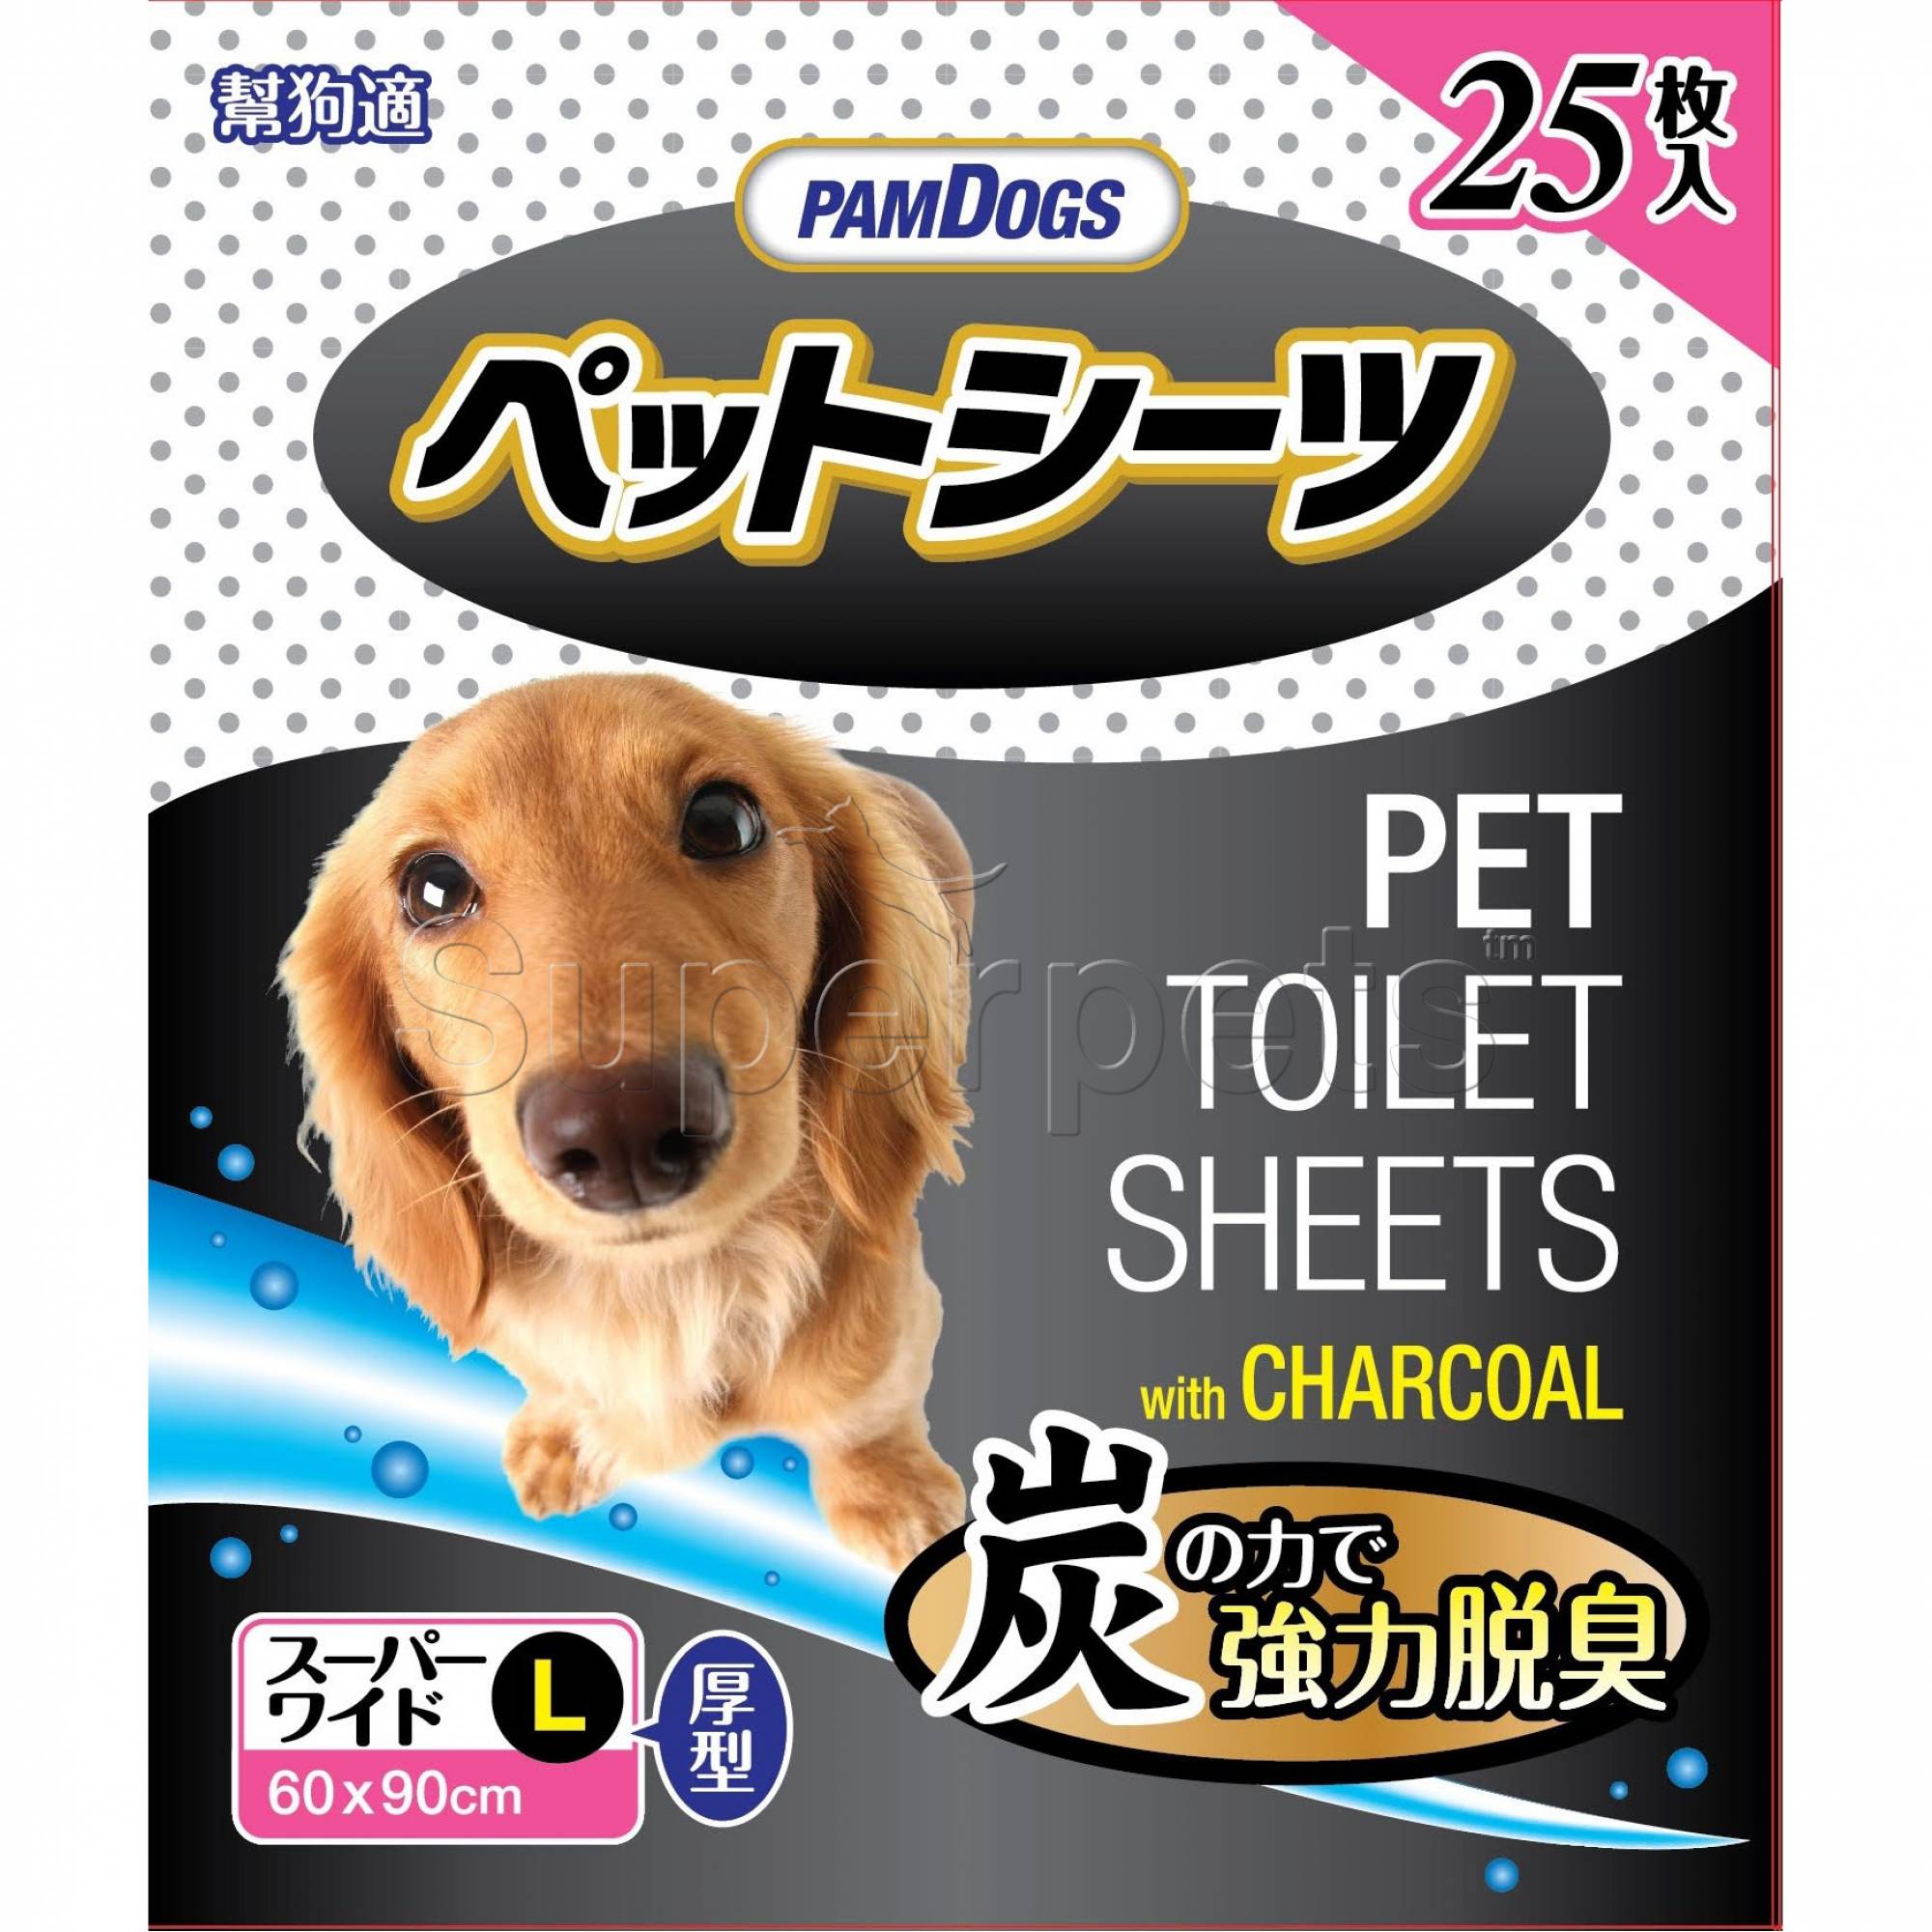 PamDogs 010 Charcoal Pet Sheets (Large) 60x90cm x25pcs